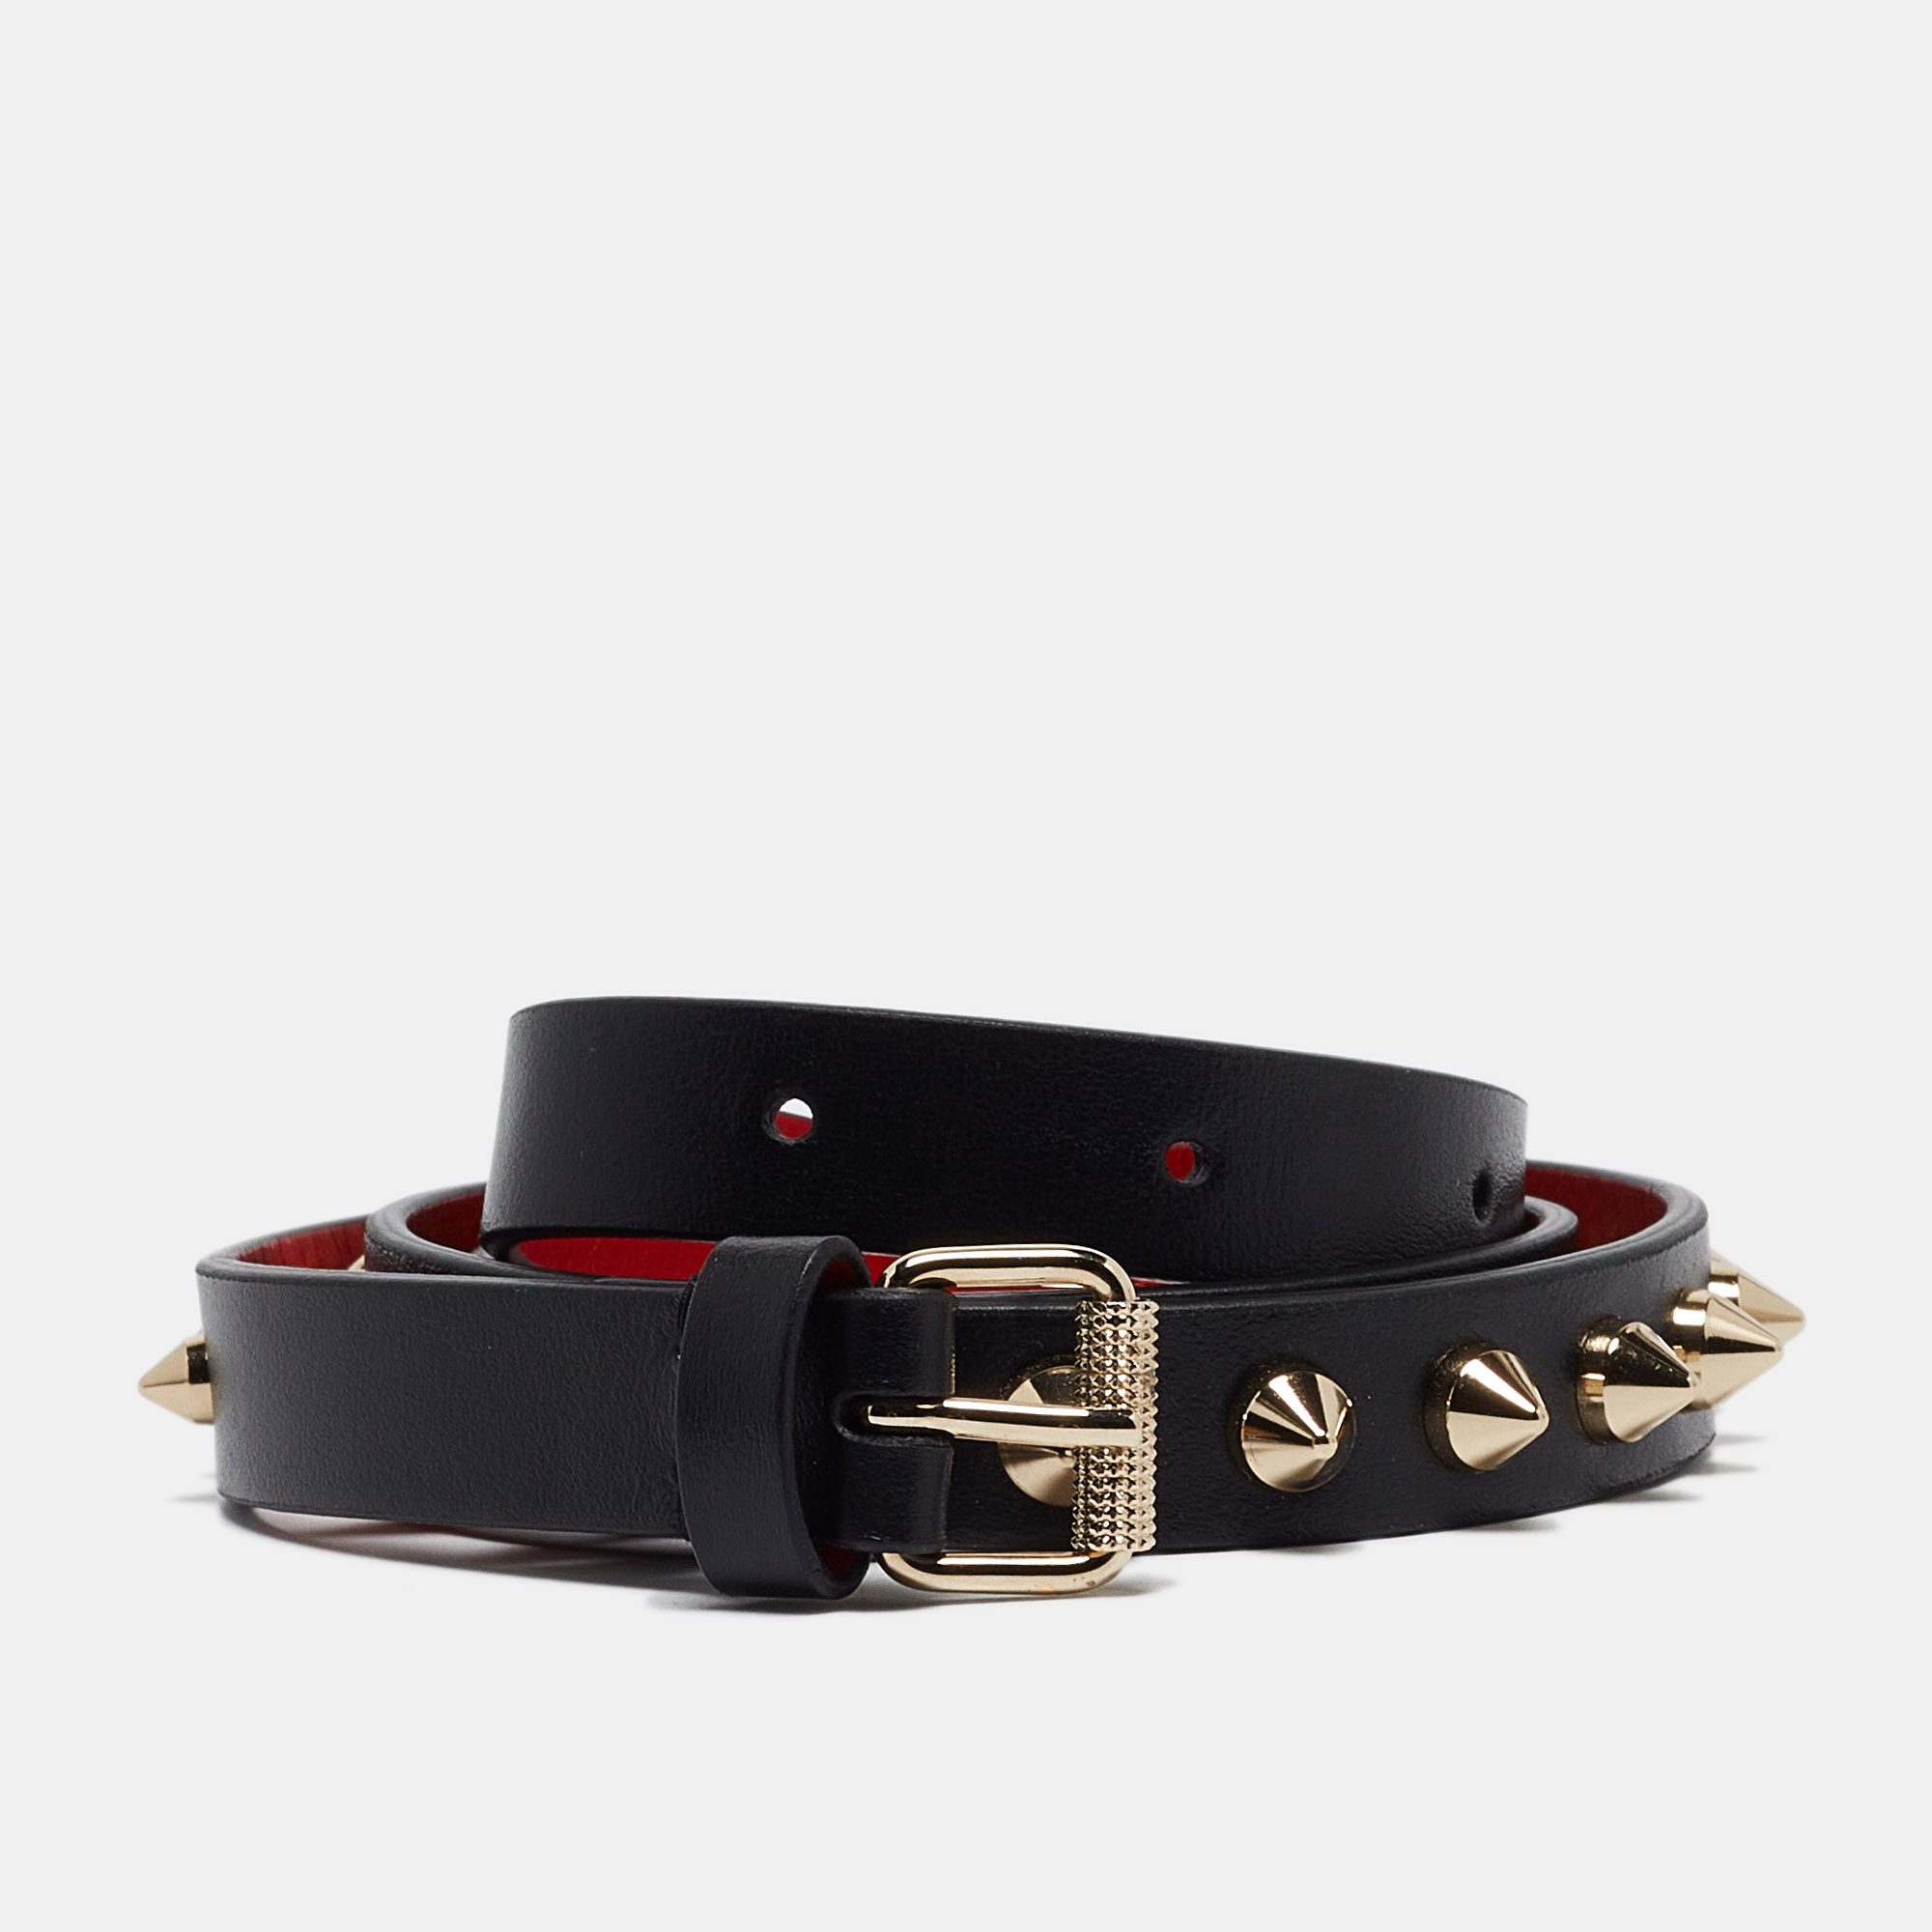 Christian louboutin black leather spike slim buckle belt 70cm